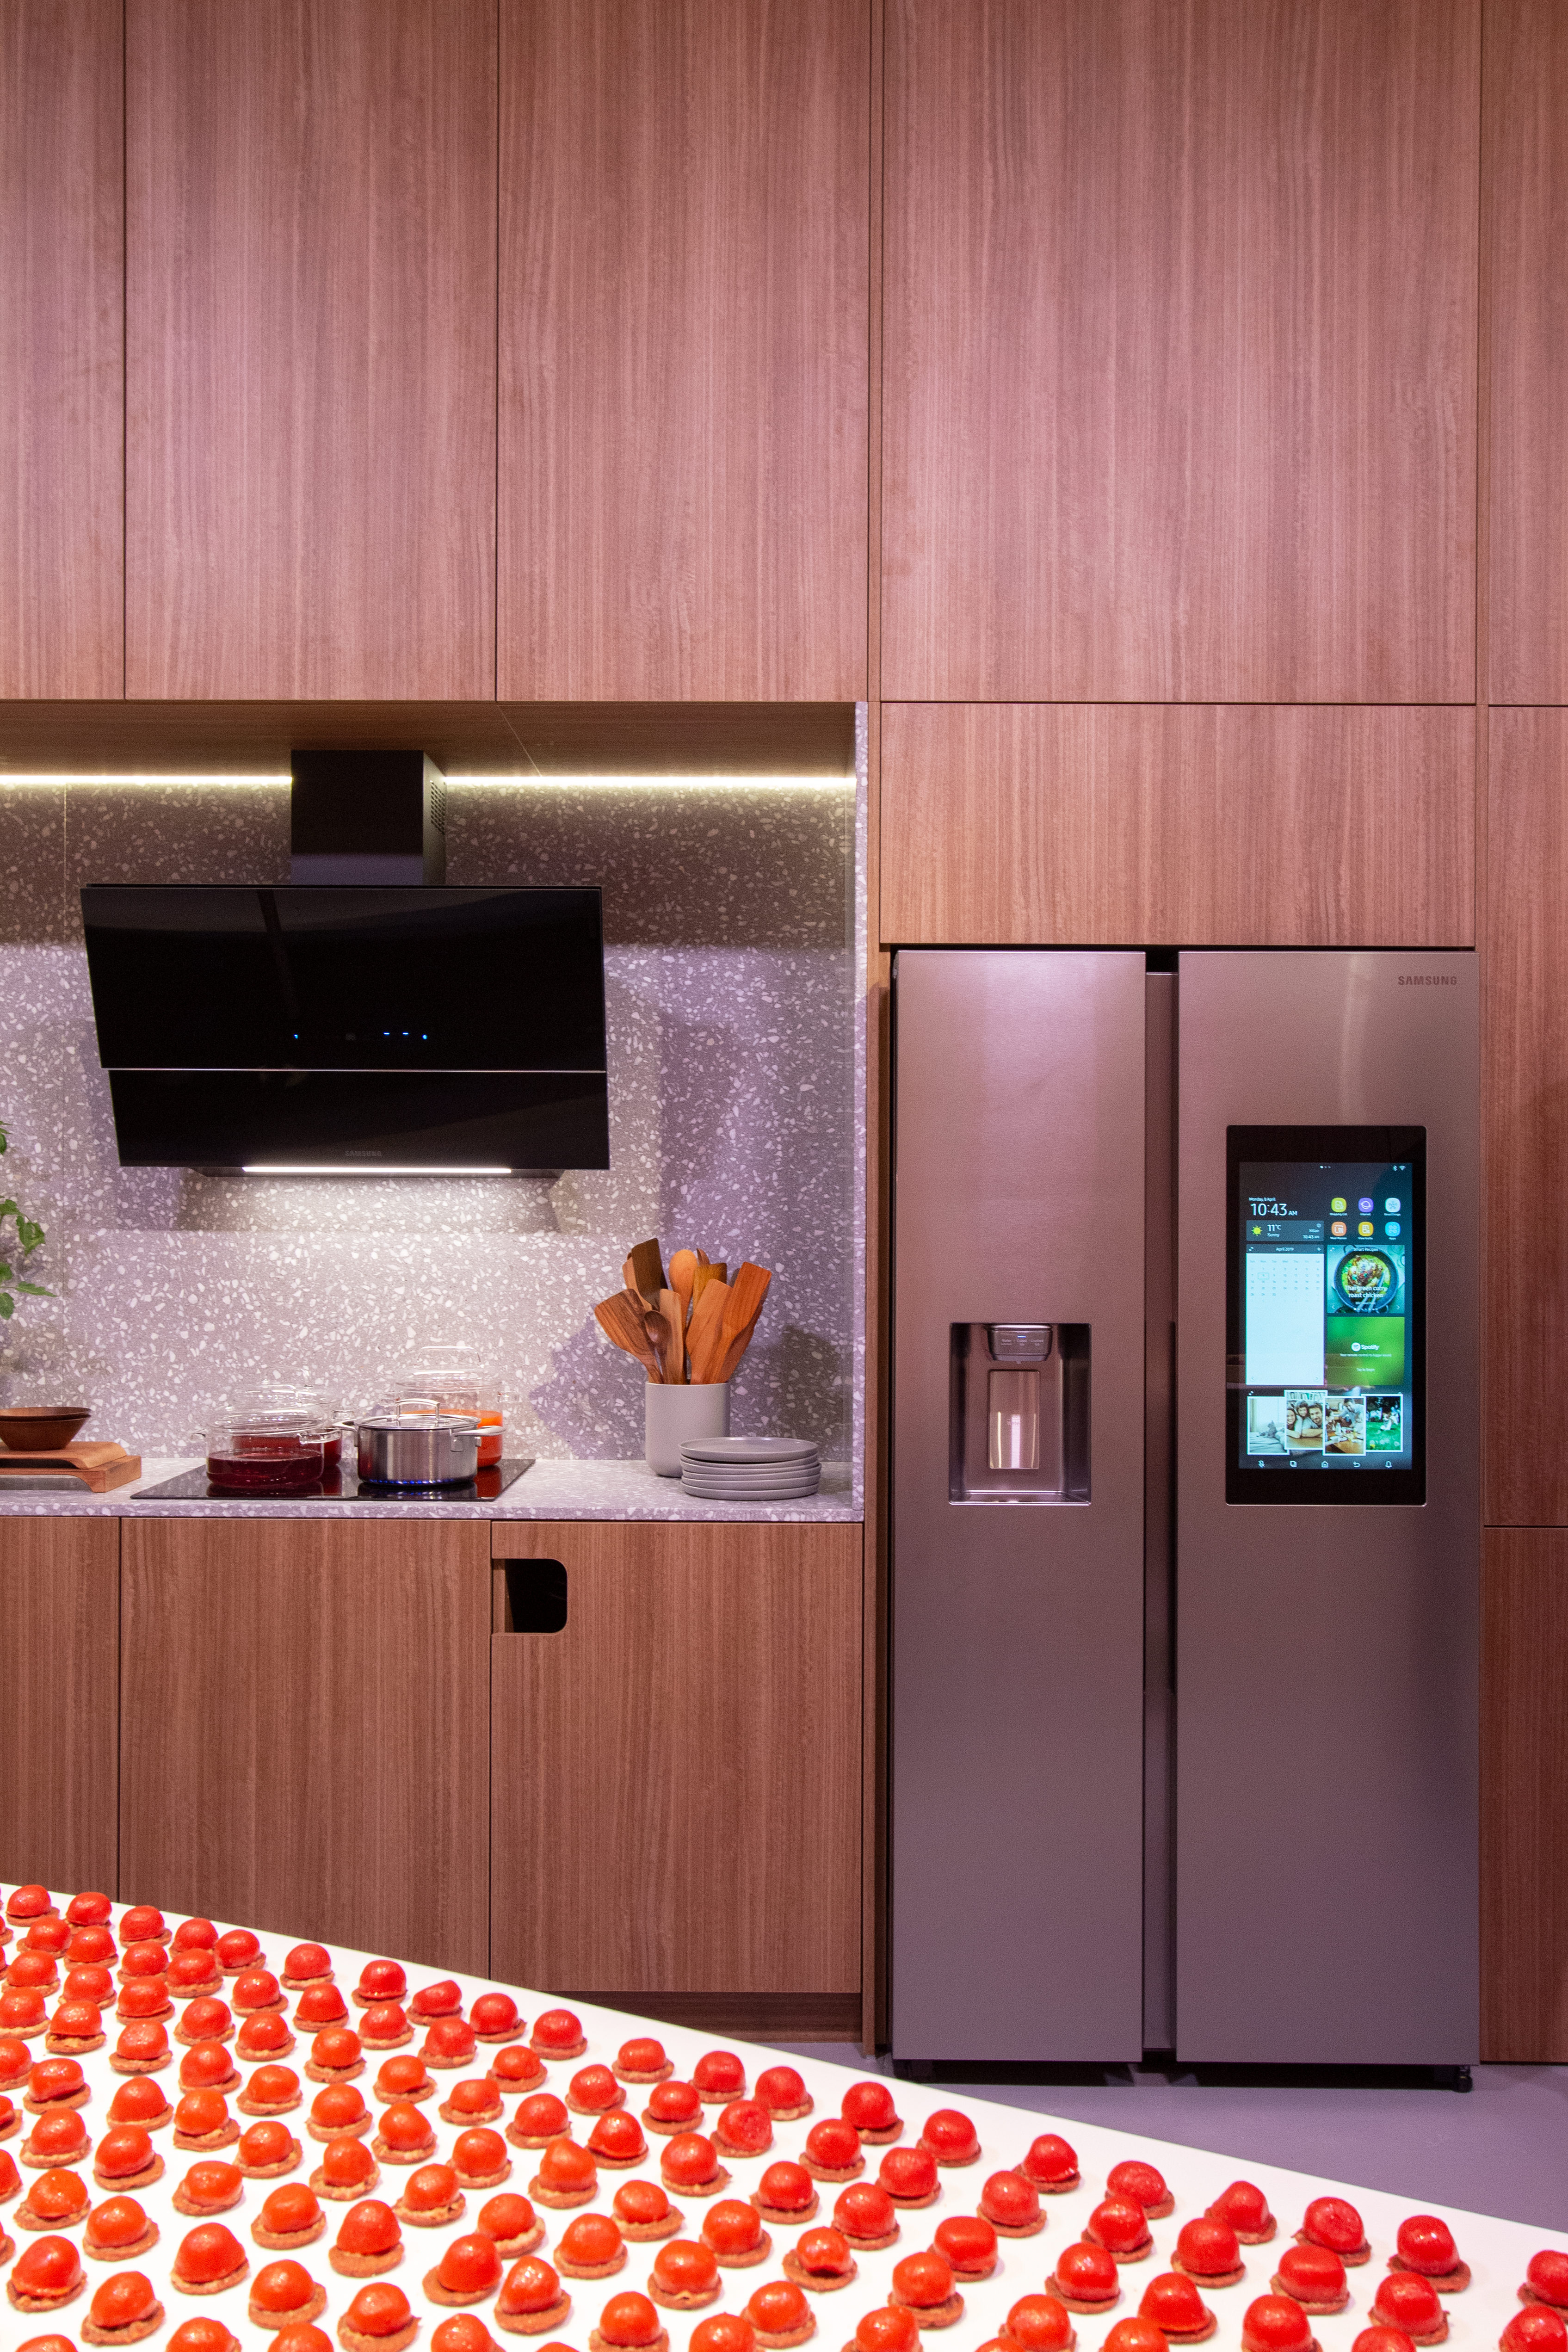 Samsung 24 hr kitchen Family Hub fridge